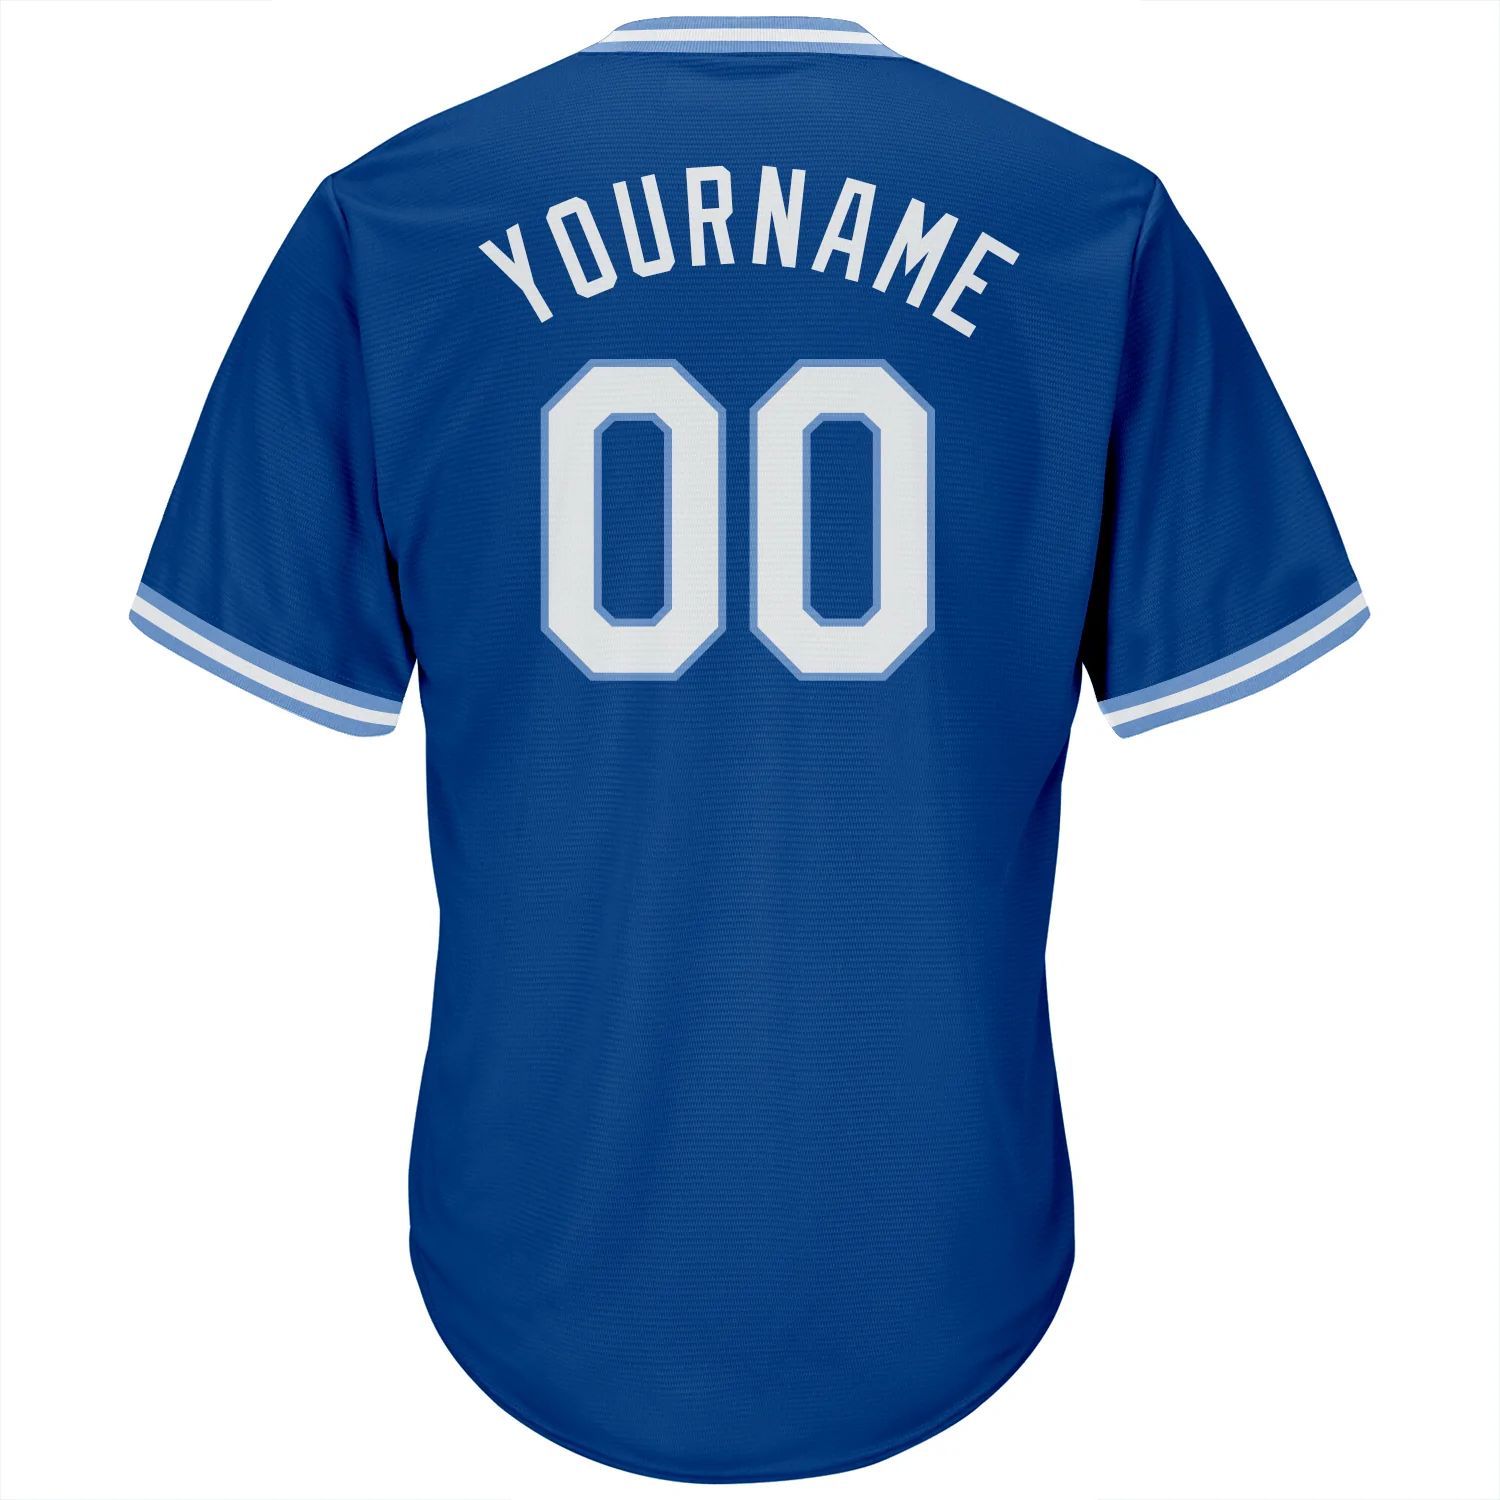 build-light-blue-royal-baseball-white-shirt-authentic-throwback-eroyal00906-online-3.jpg